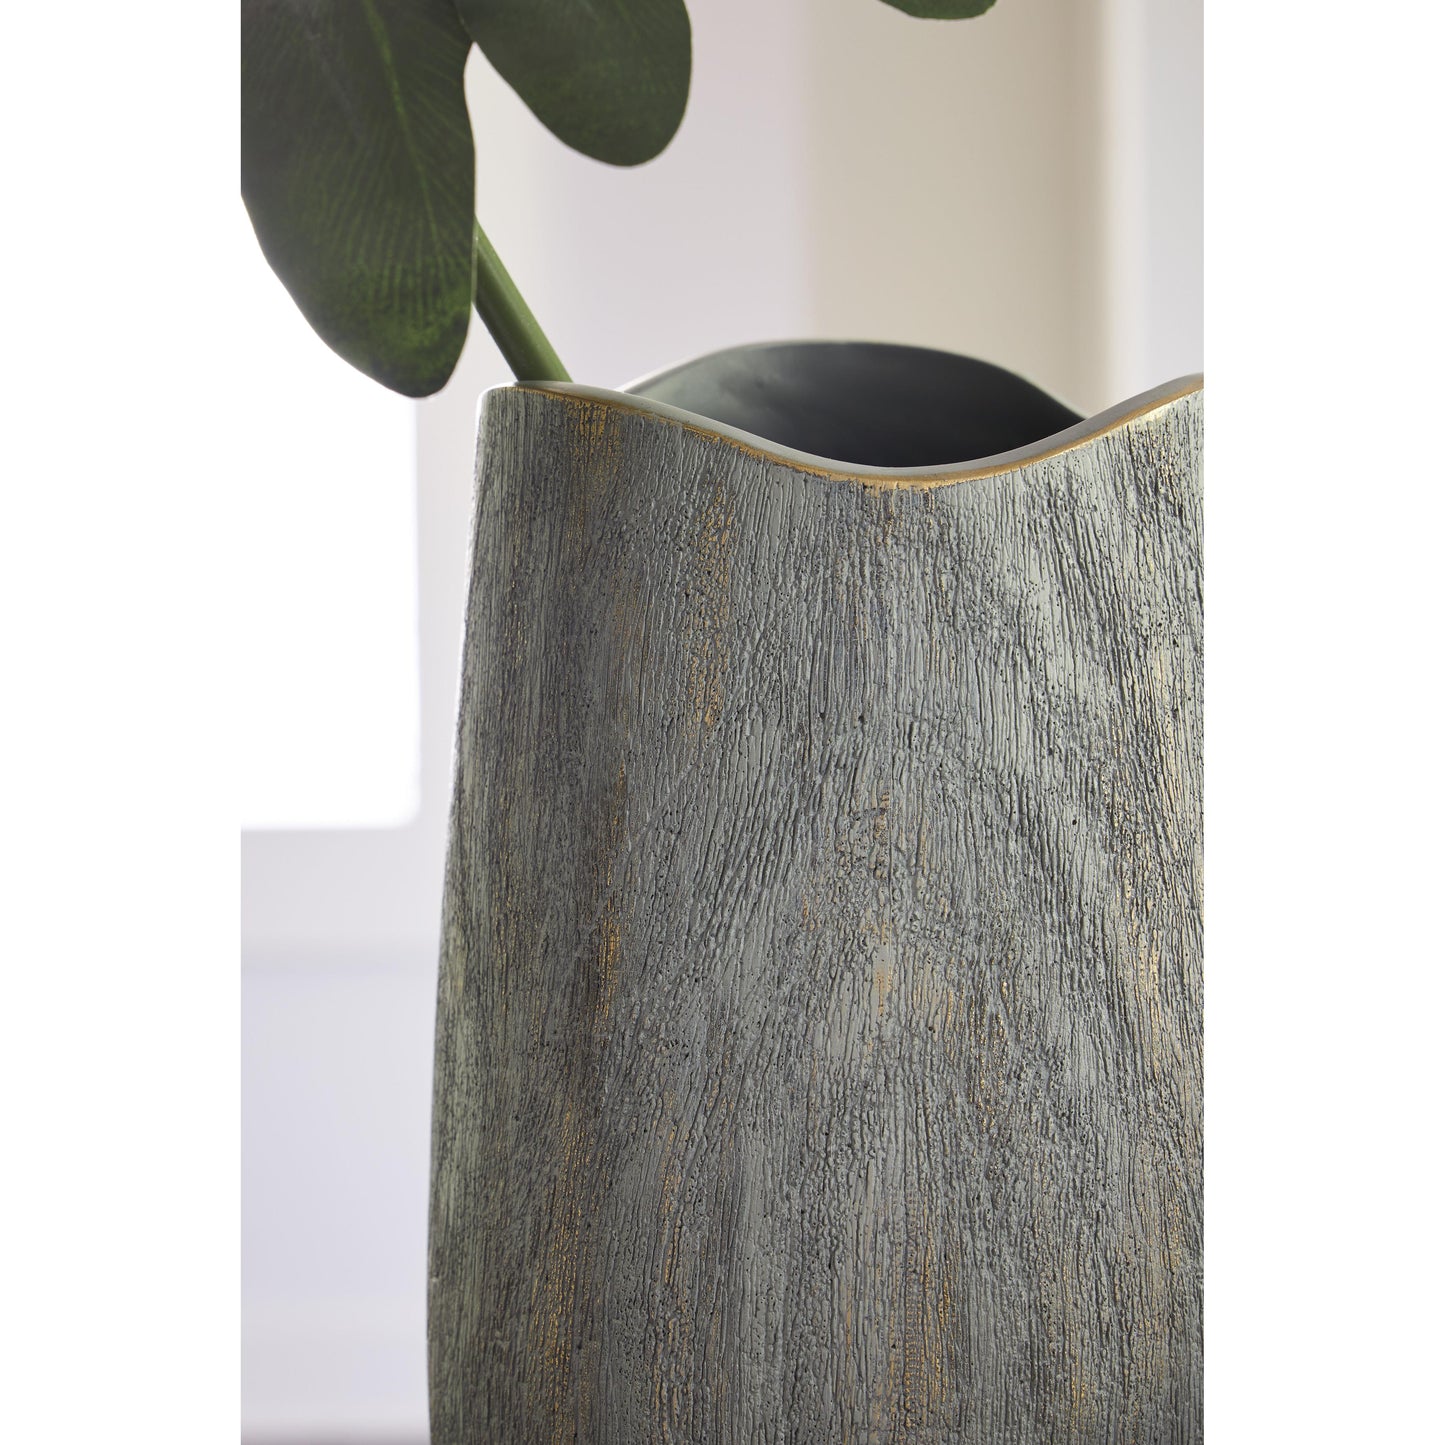 Signature Design by Ashley Home Decor Vases & Bowls A2000549 IMAGE 4